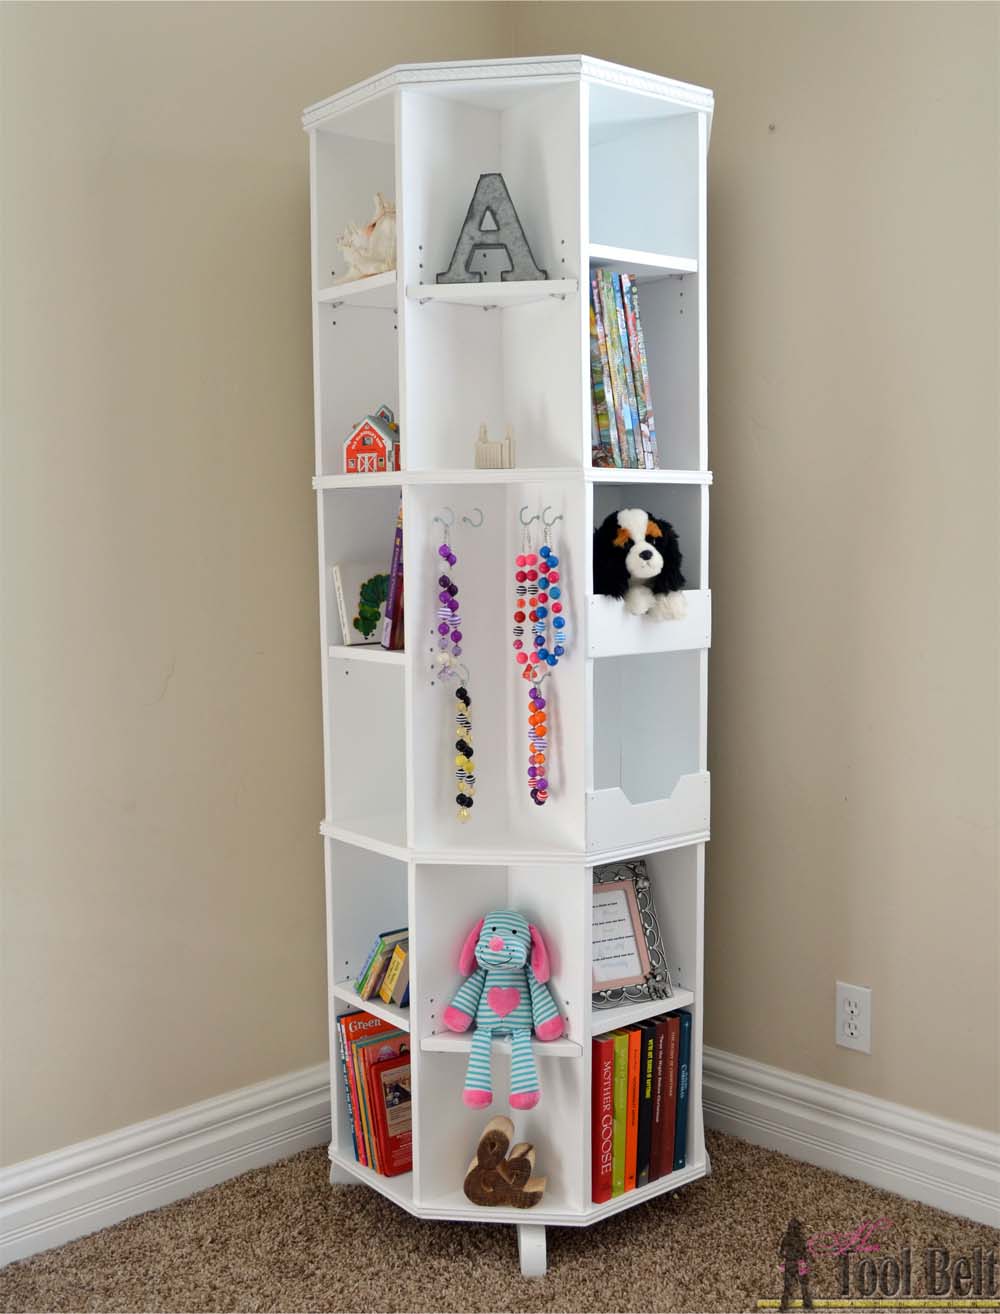 Octagon Rotating Bookshelf Her Tool Belt, Rotating Bookcase Door